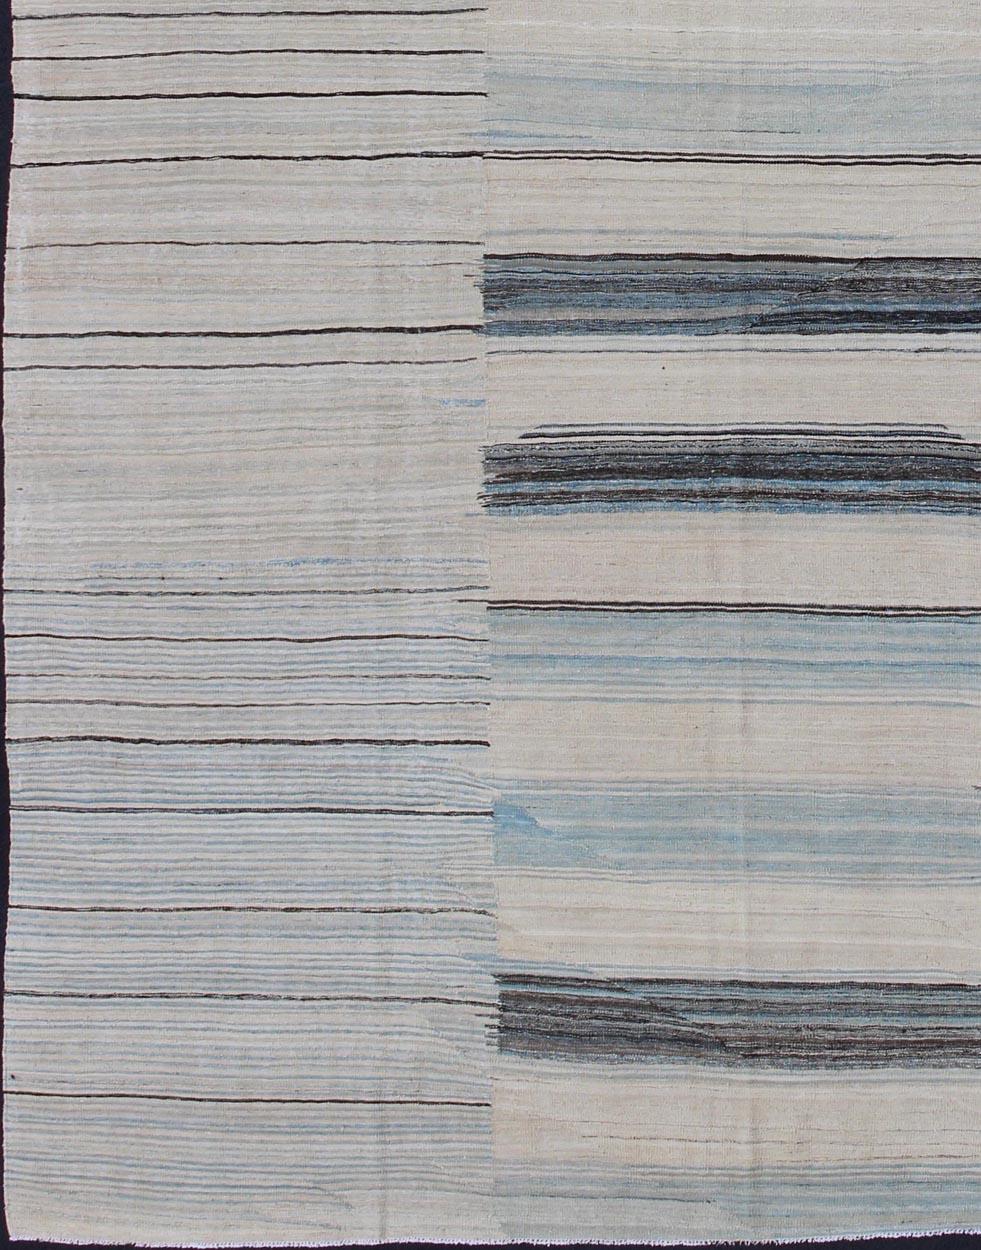 Afghan Modern Flat-Weave Kilim Rug in Three Panel Striped Design in Ocean Blue & Taupe